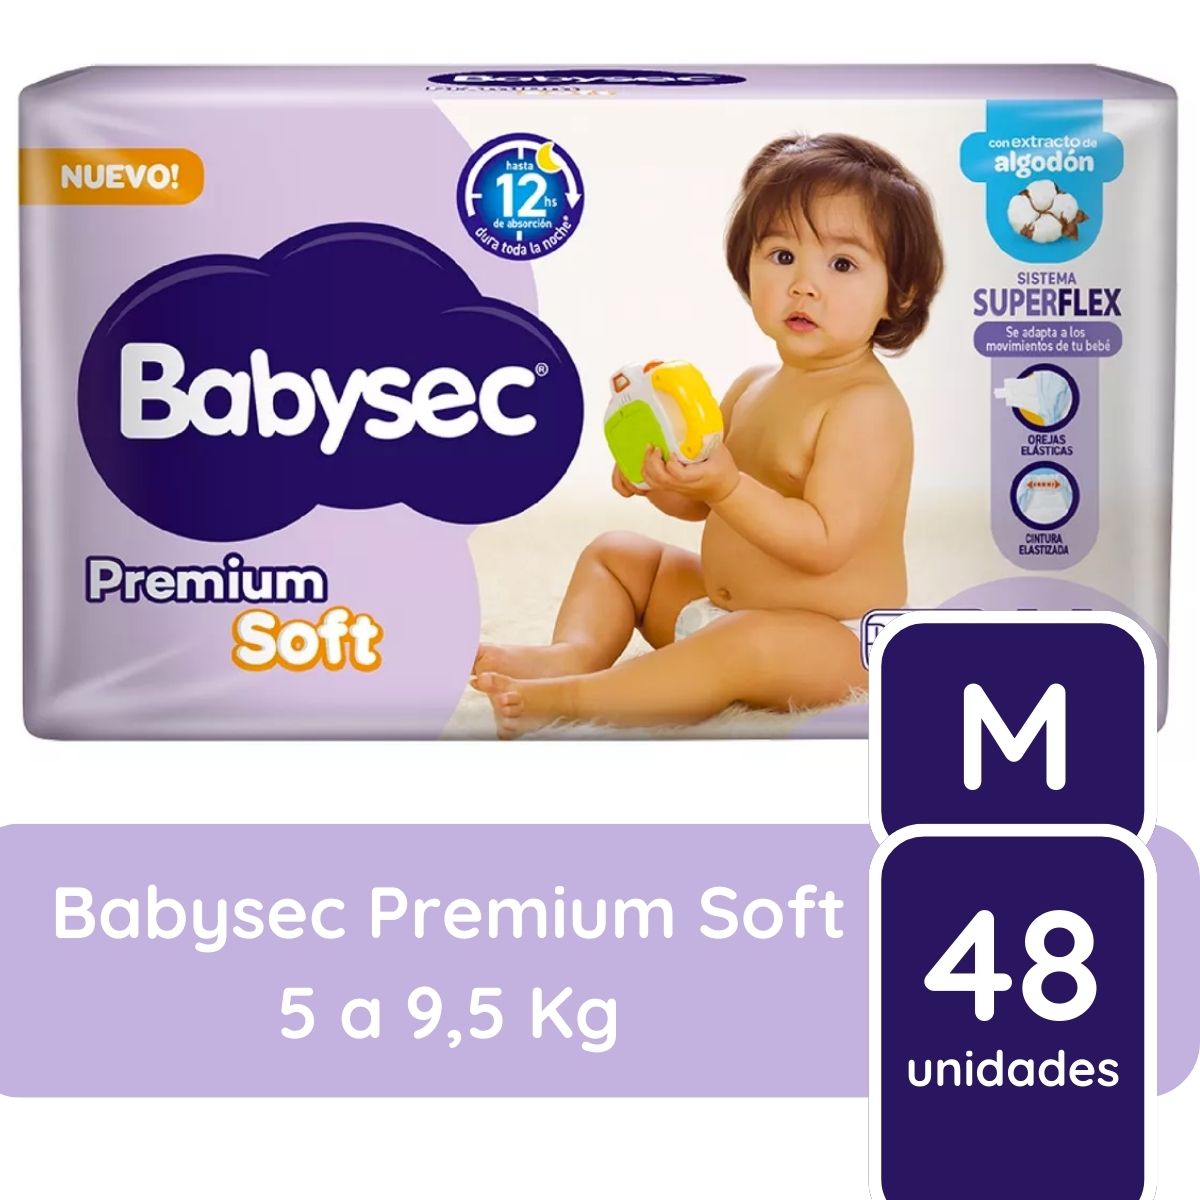 Miniatura 1 de 5 de Pañales Babysec Premium Soft Talle M x48 unidades